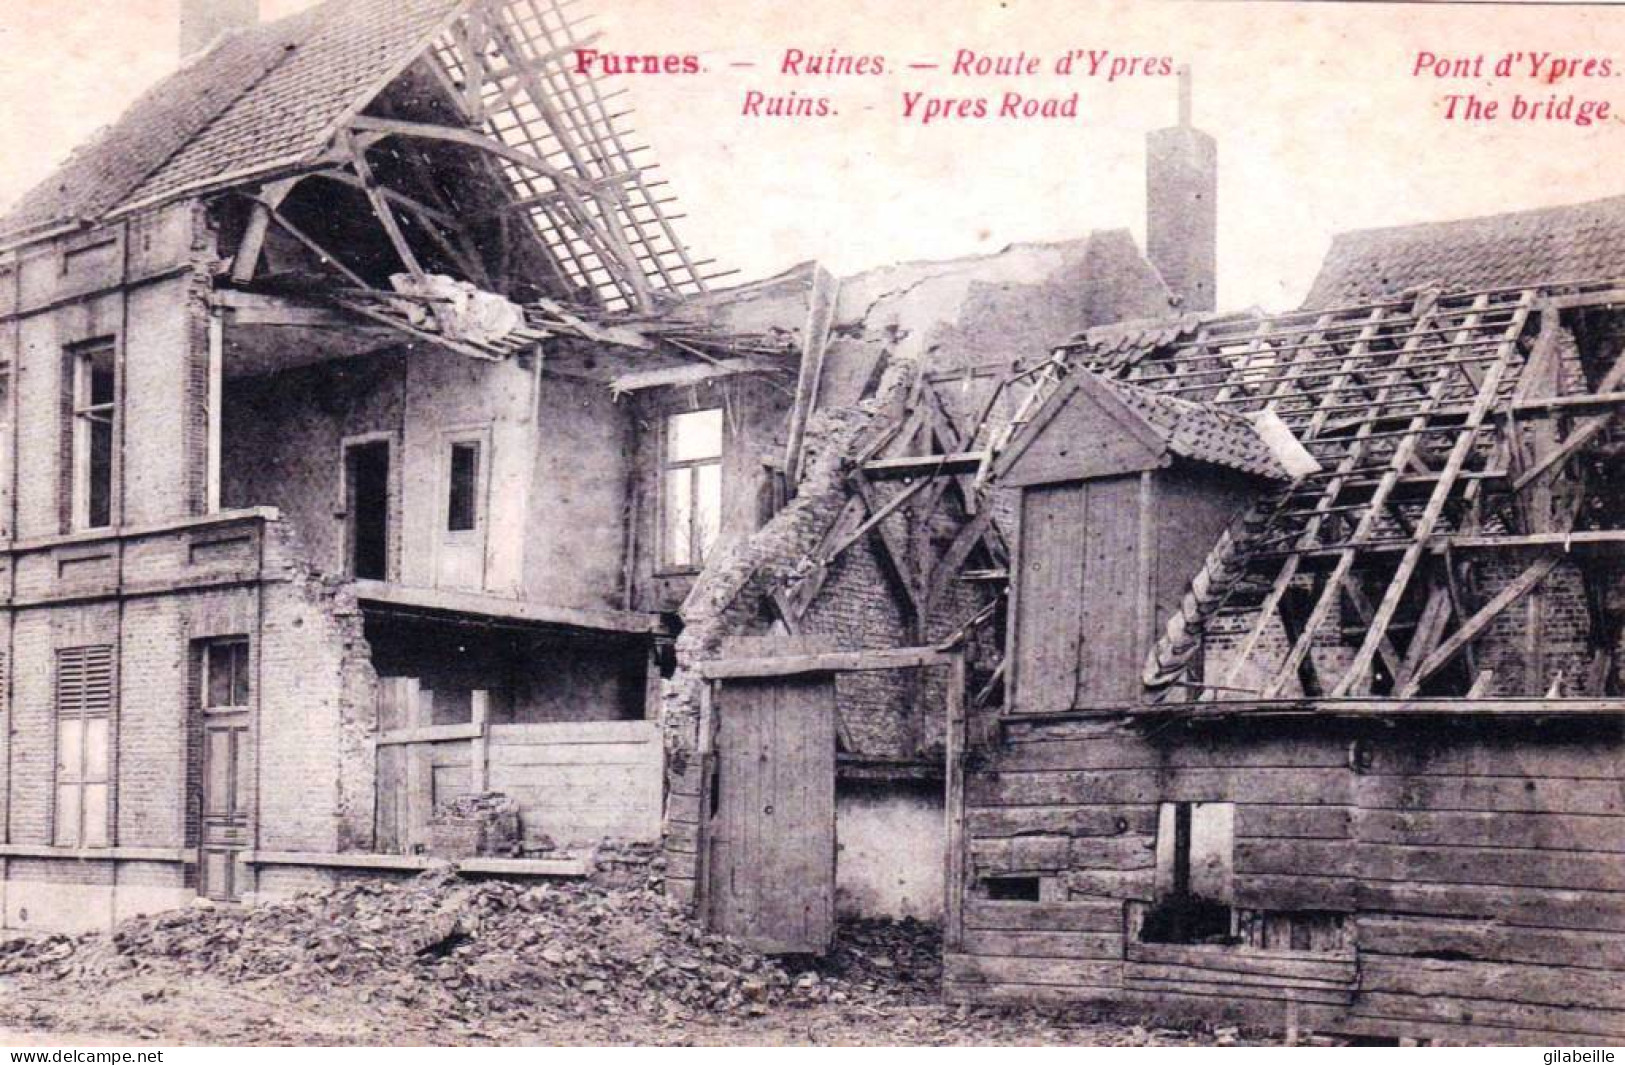  VEURNE/ FURNES -  Ruines De Furnes -  Route D'Ypres   - Guerre 1914/18 - Veurne